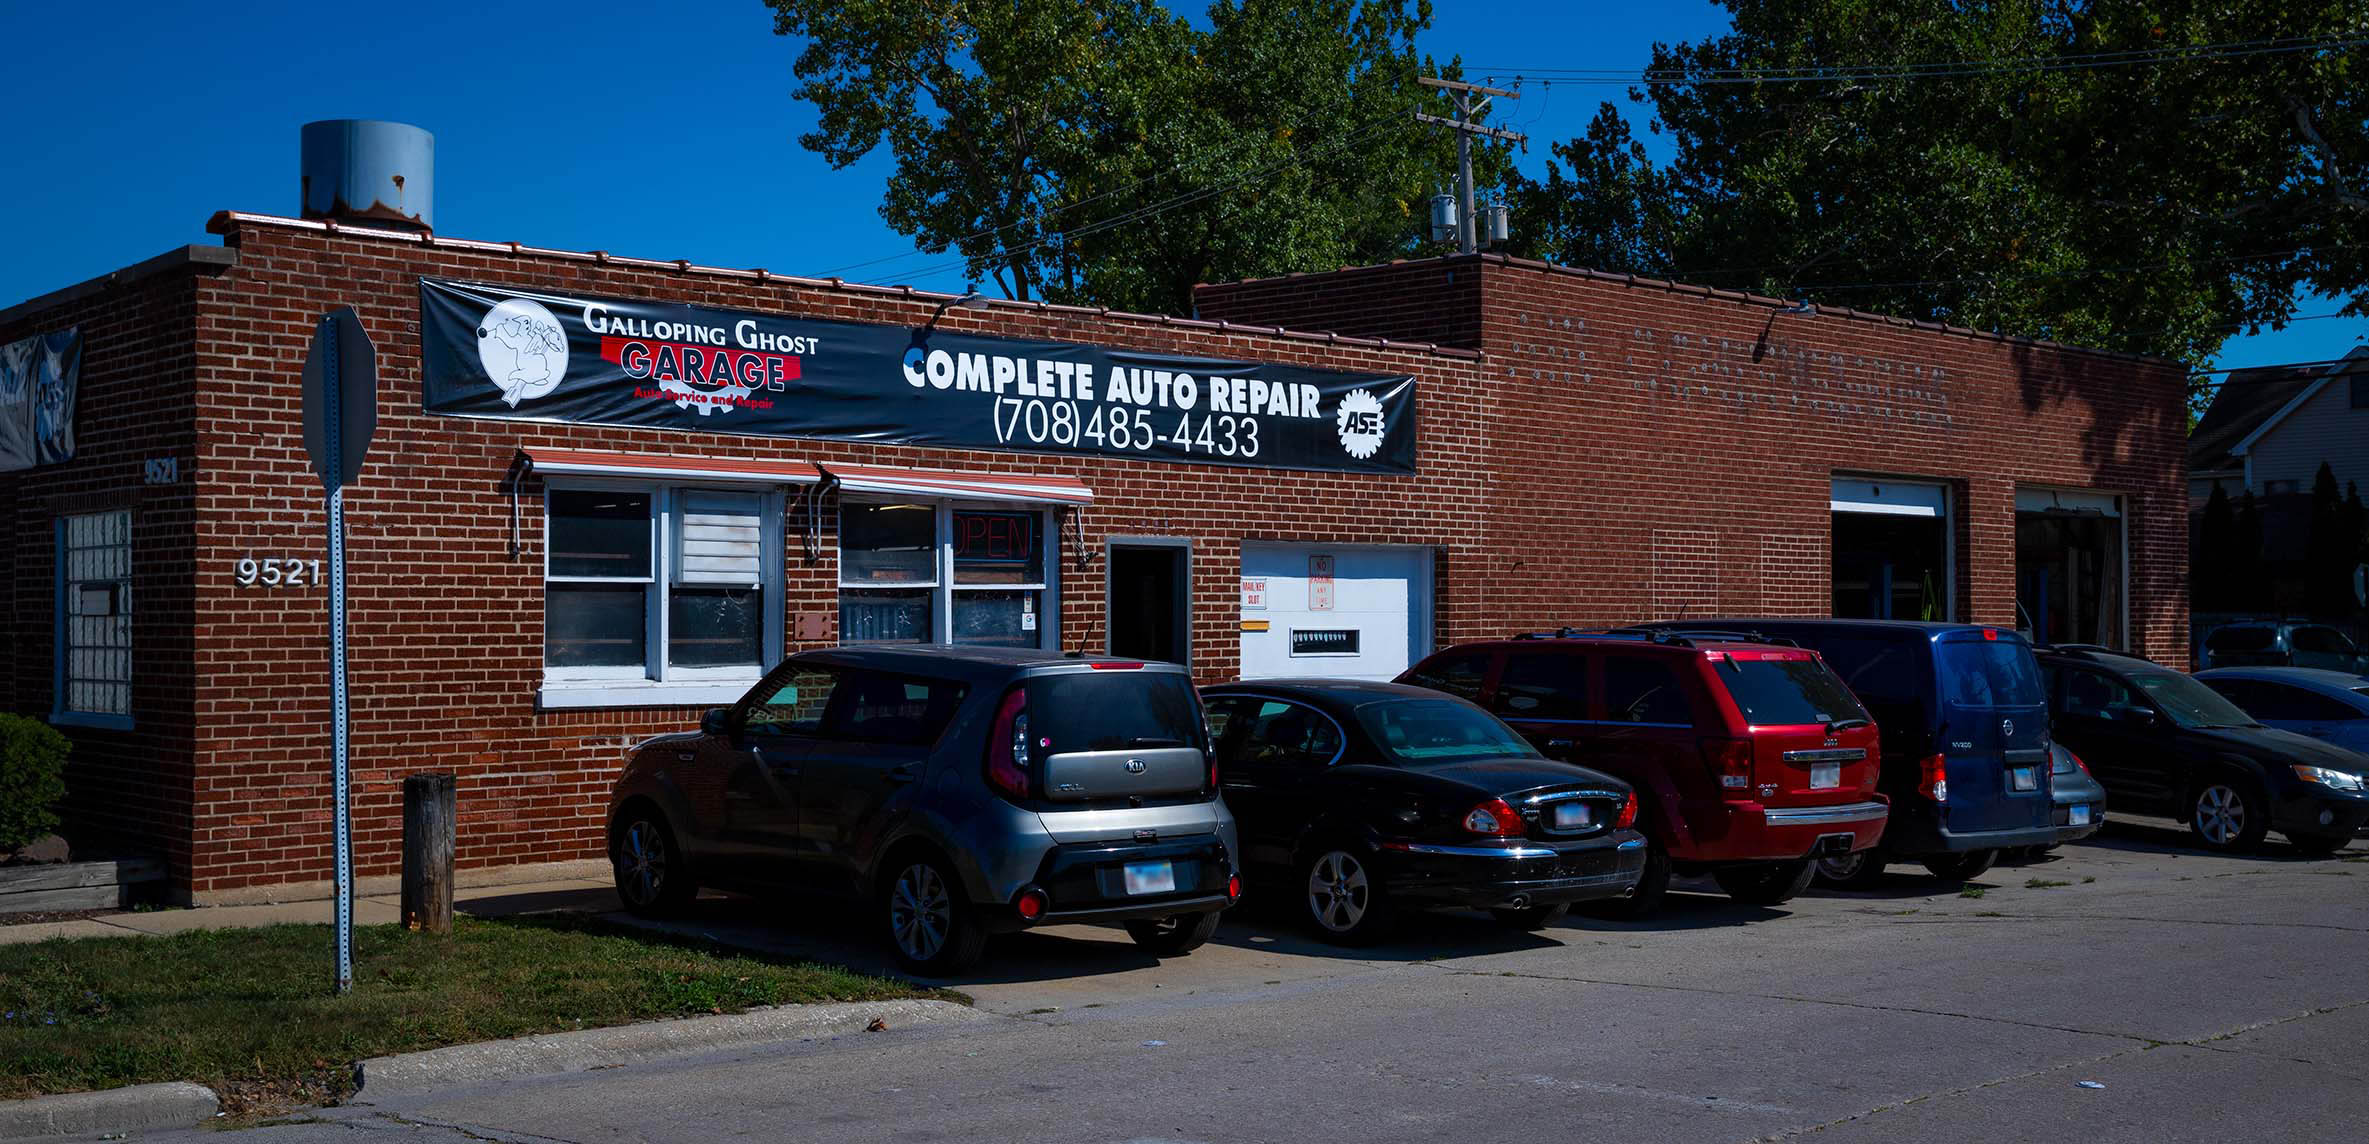 Galloping Ghost Garage exterior shot of auto repair building.